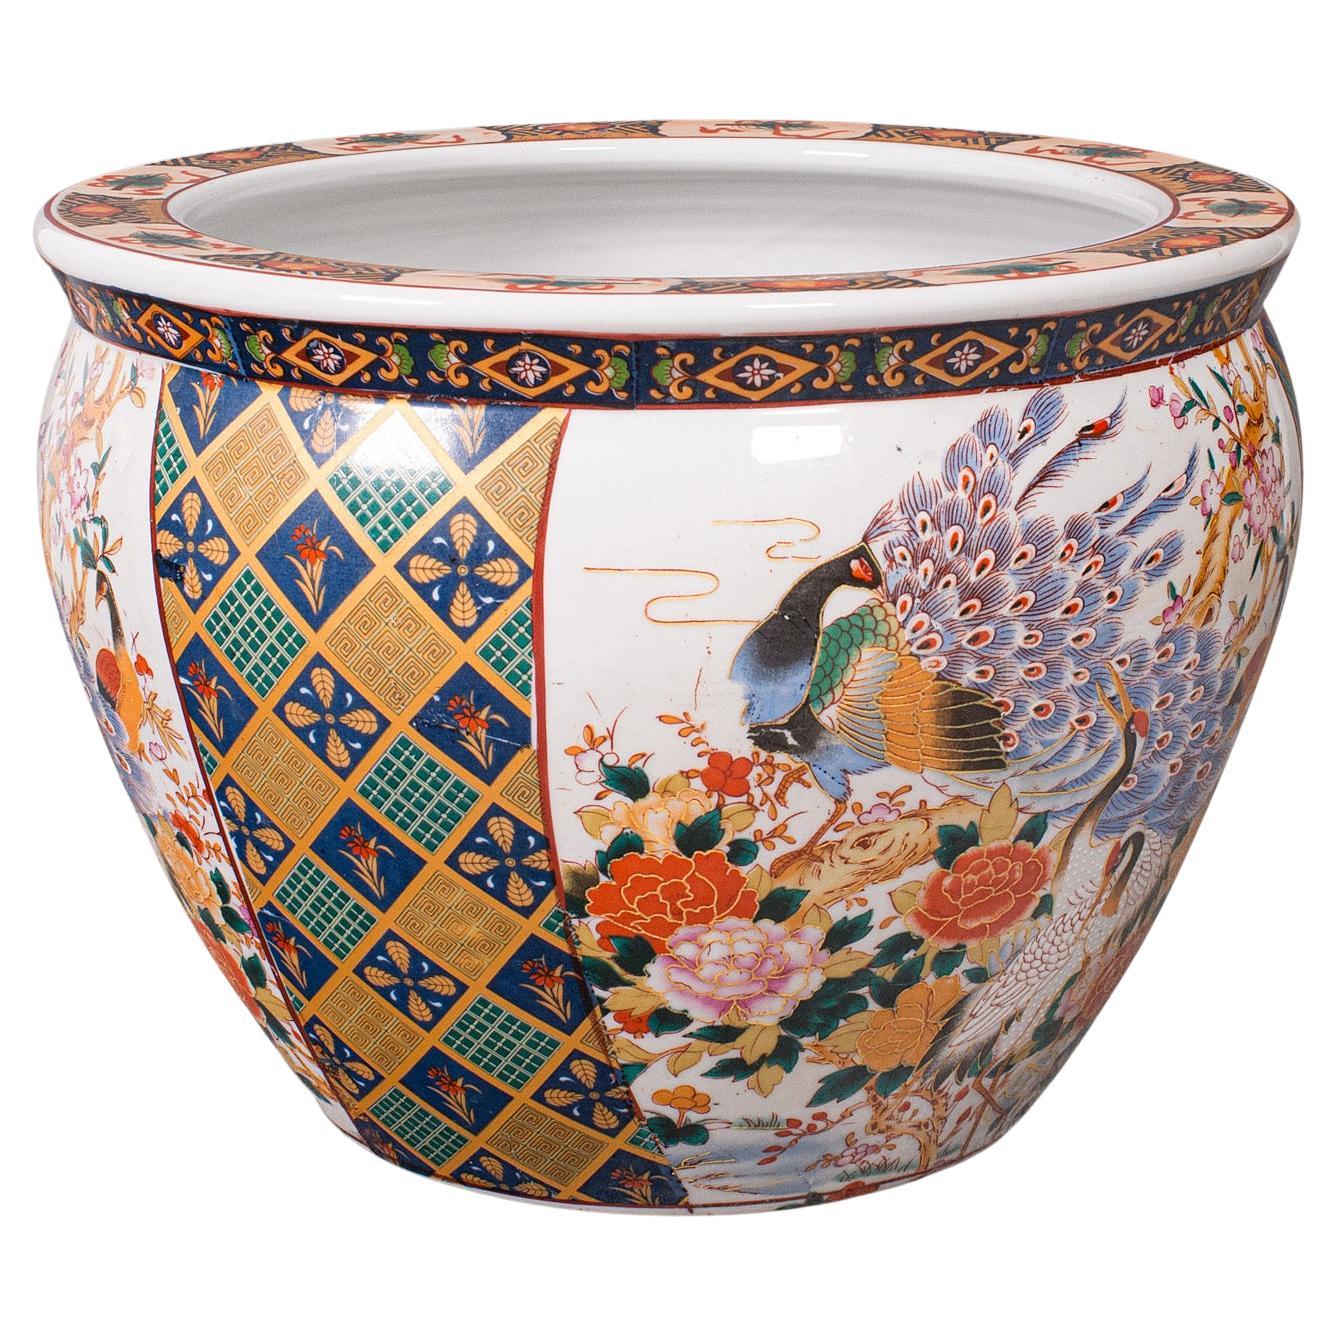 Vintage Decorative Fish Bowl, Chinese, Ceramic, Jardiniere, Planter, Art Deco